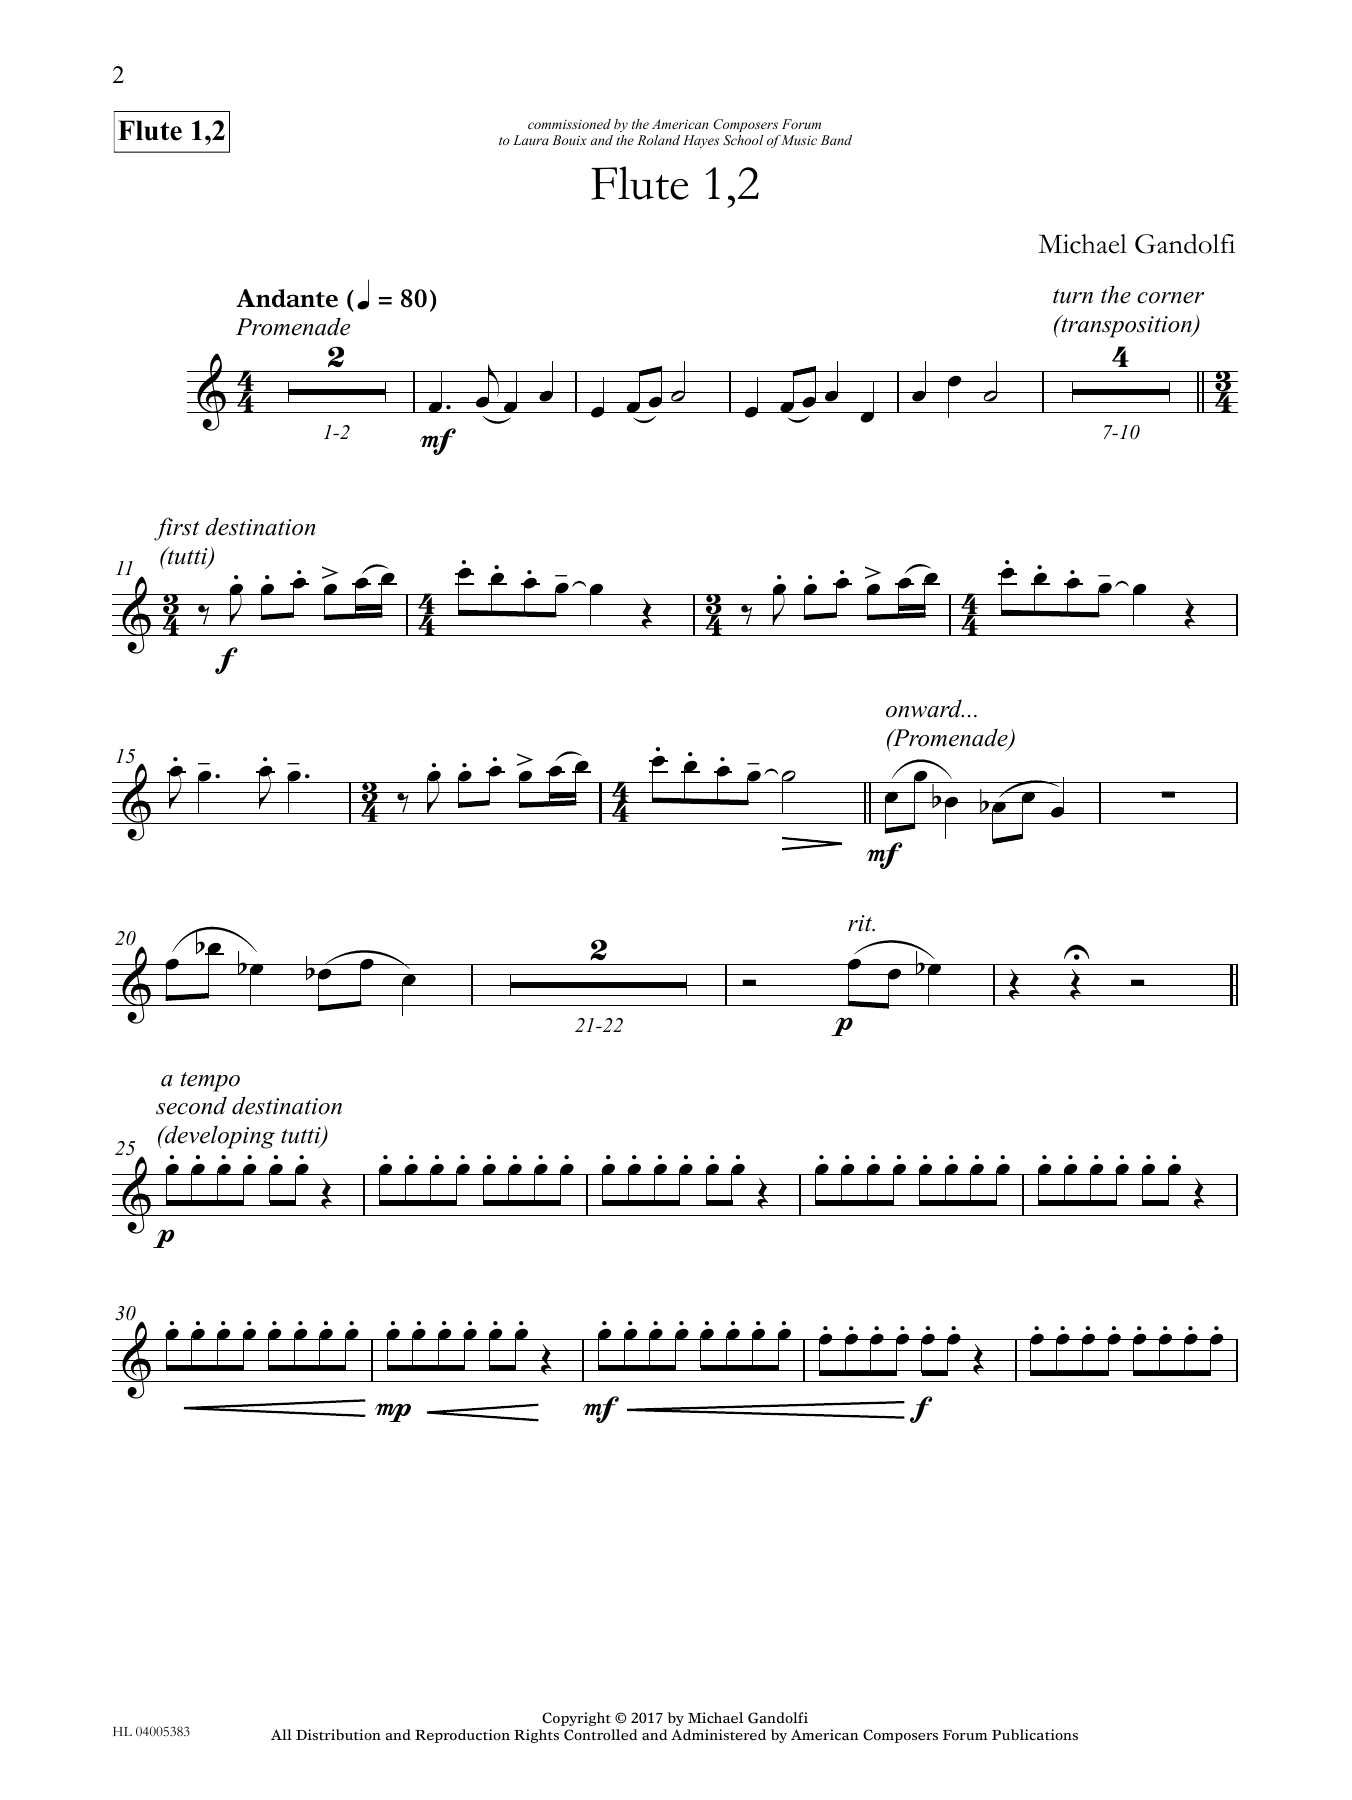 Michael Gandolfi Steps Ahead - Flute 1 & 2 Sheet Music Notes & Chords for Concert Band - Download or Print PDF